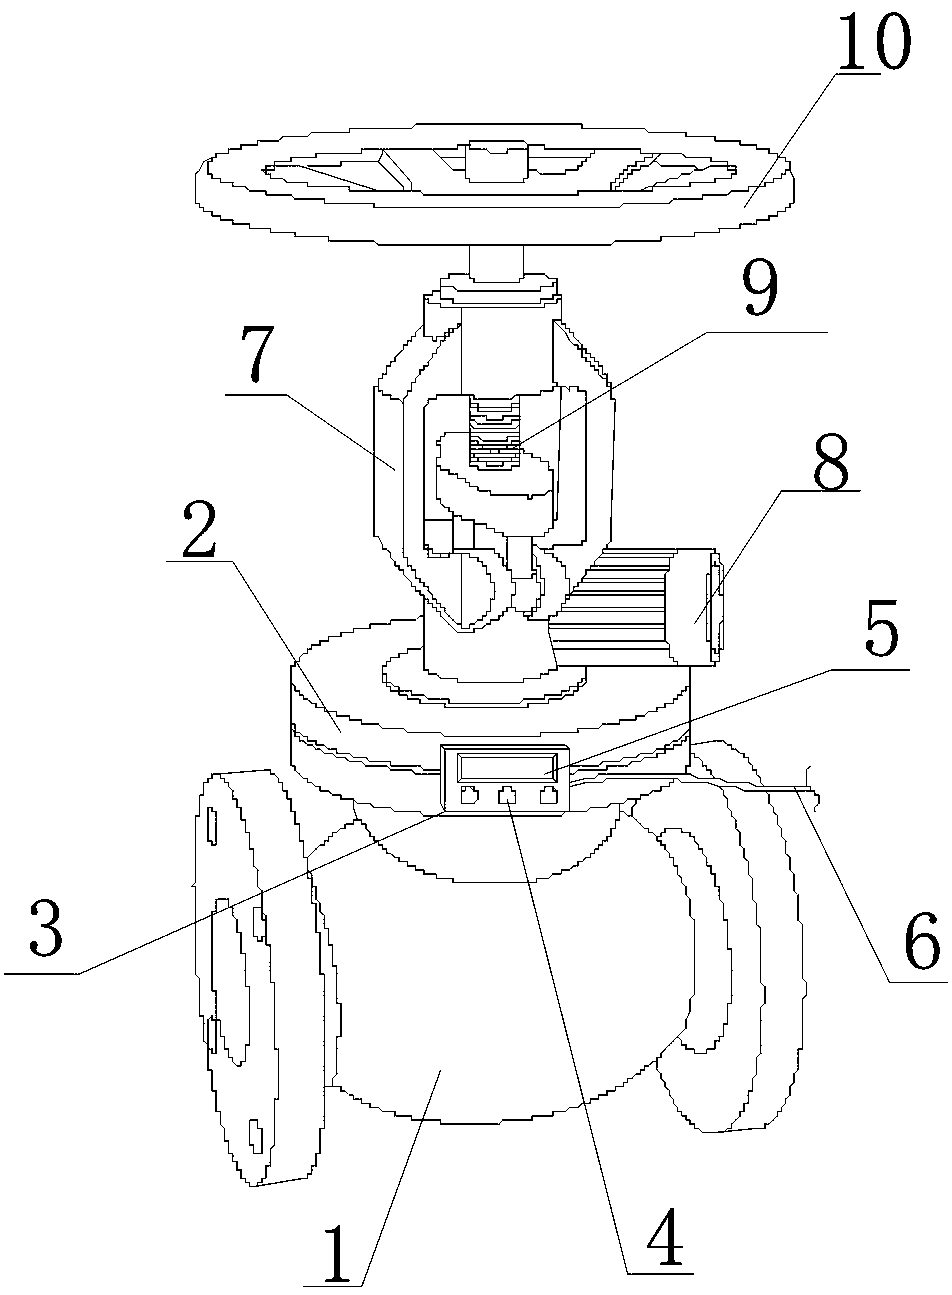 High-pressure oblique stop valve